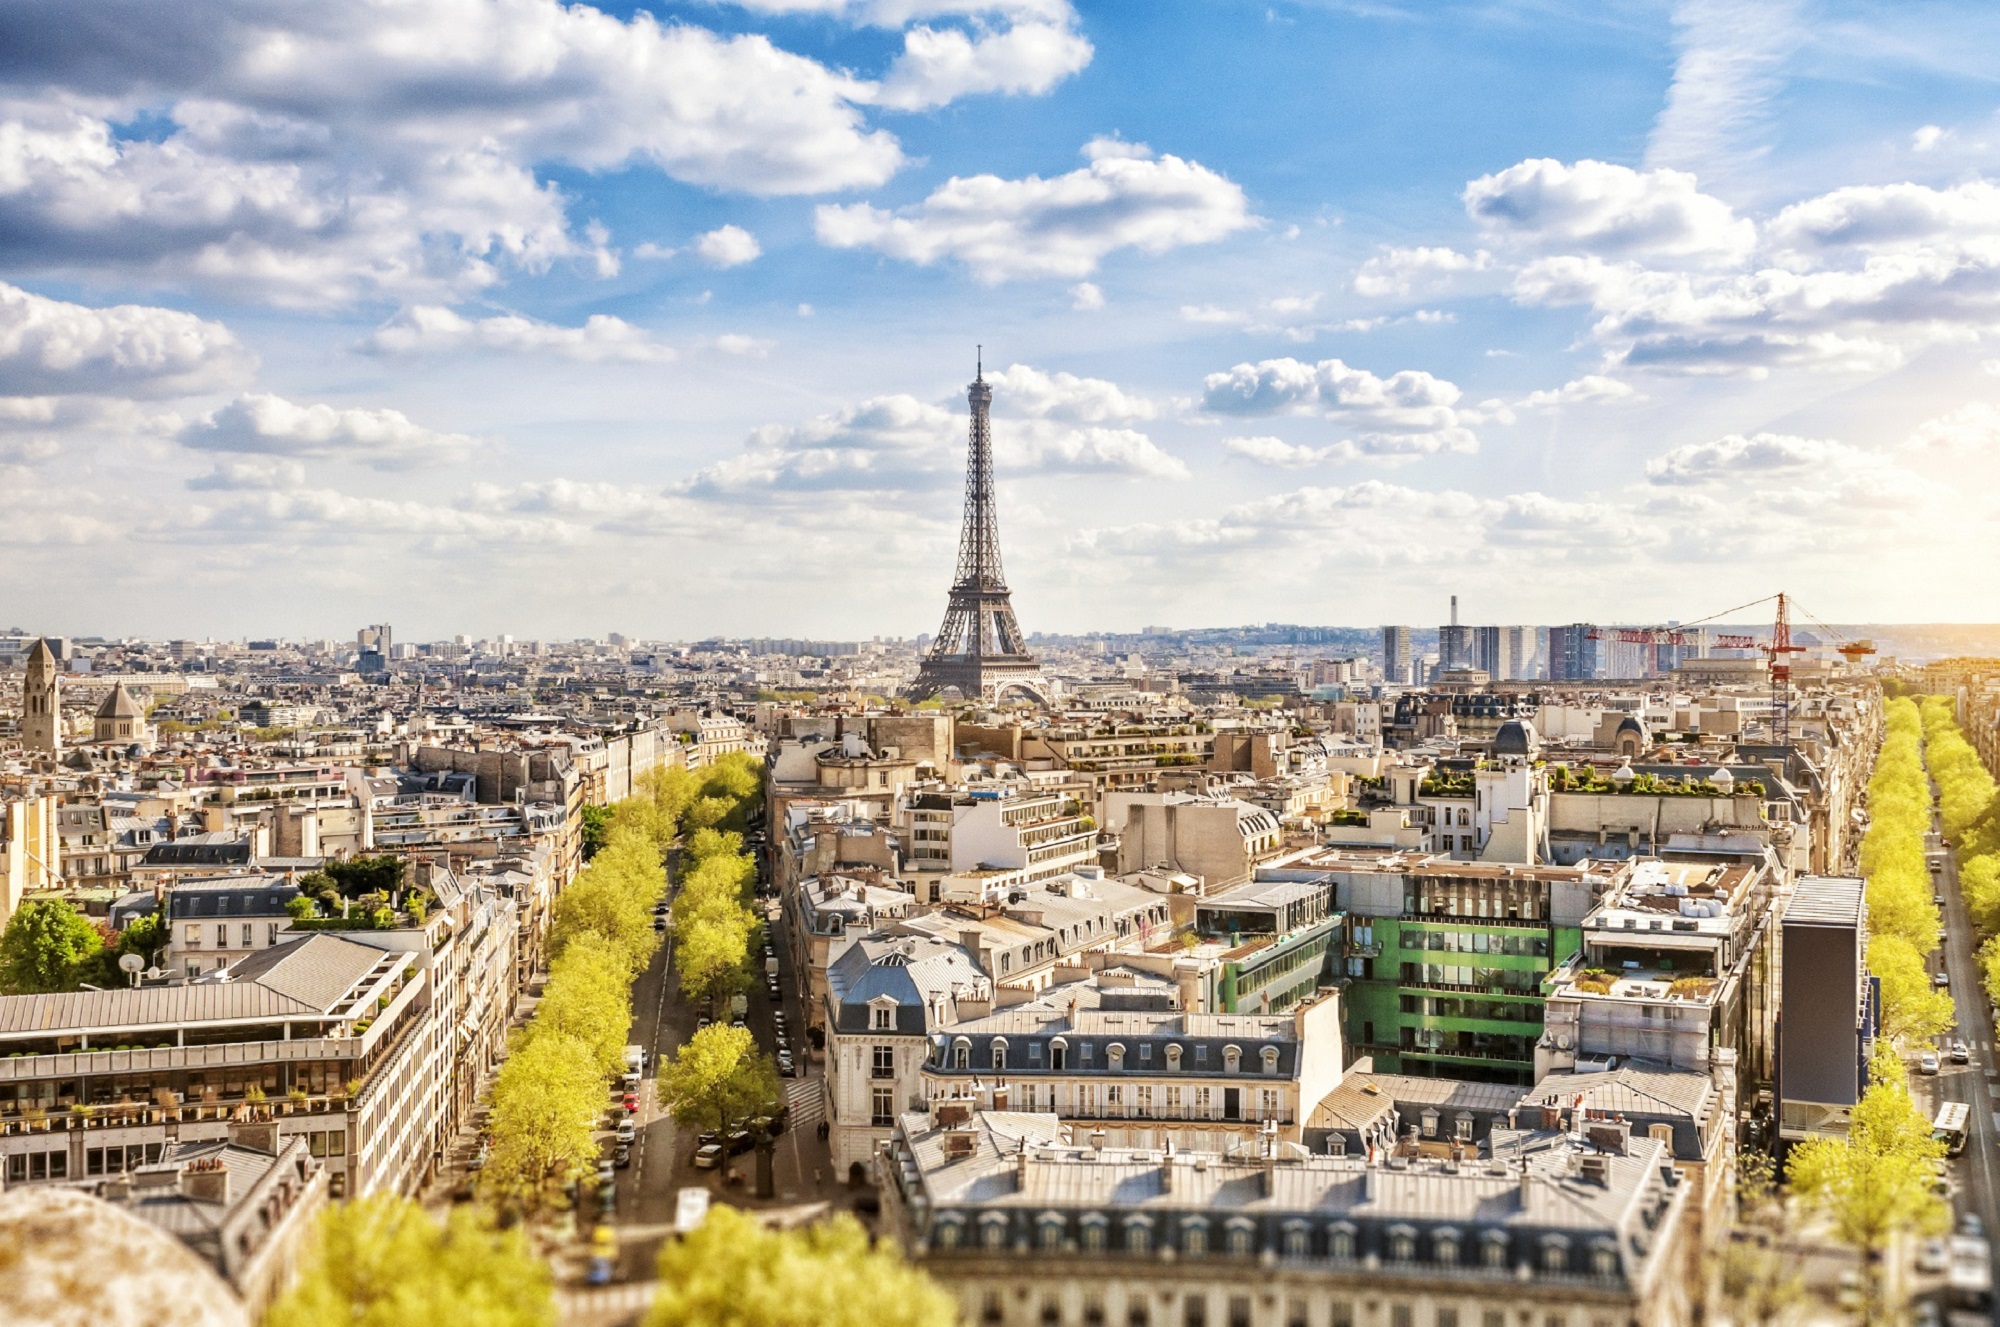 Виды парижа. Париж панорама Эйфелева башня. Панорама эльфовой башни. Париж Эйфелева башня вид с города. Панорамный вид Парижа.